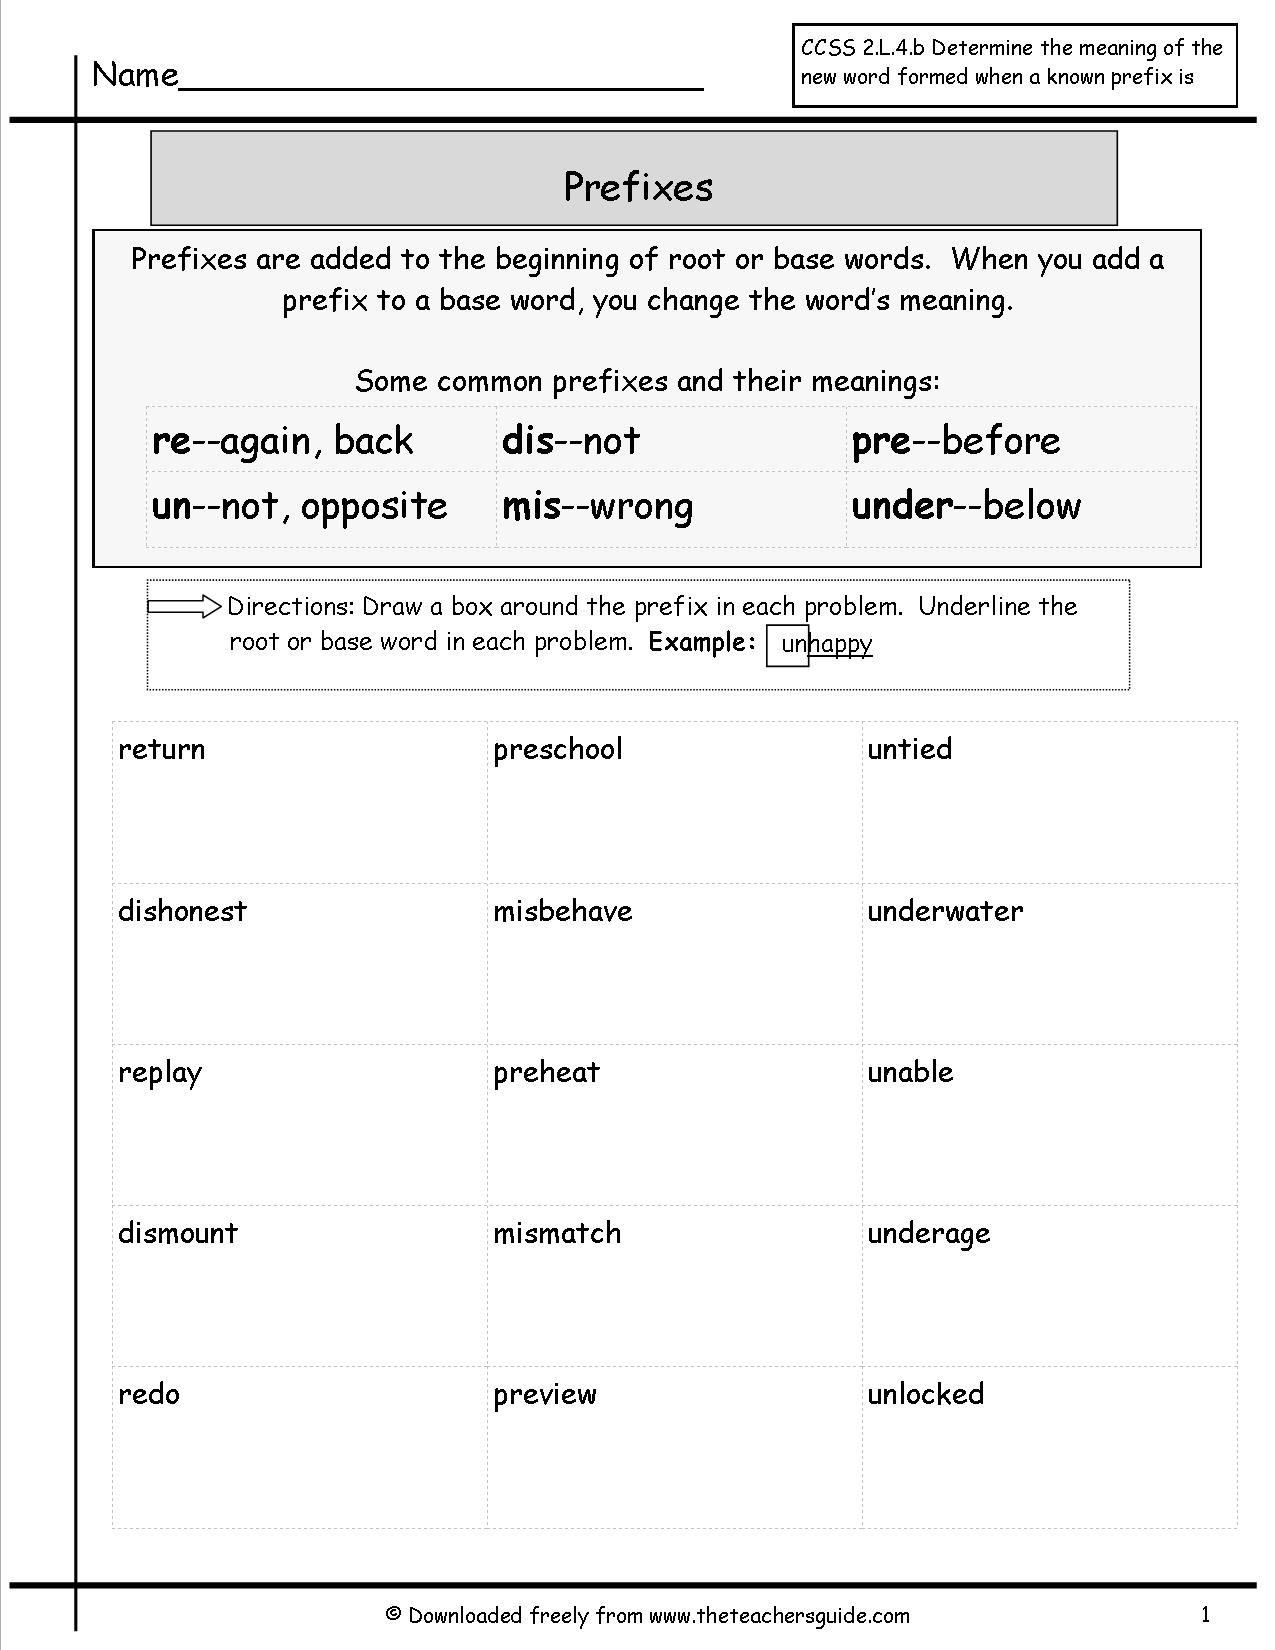 36 Stunning Prefix And Suffix Worksheets Ideas | Prefixes